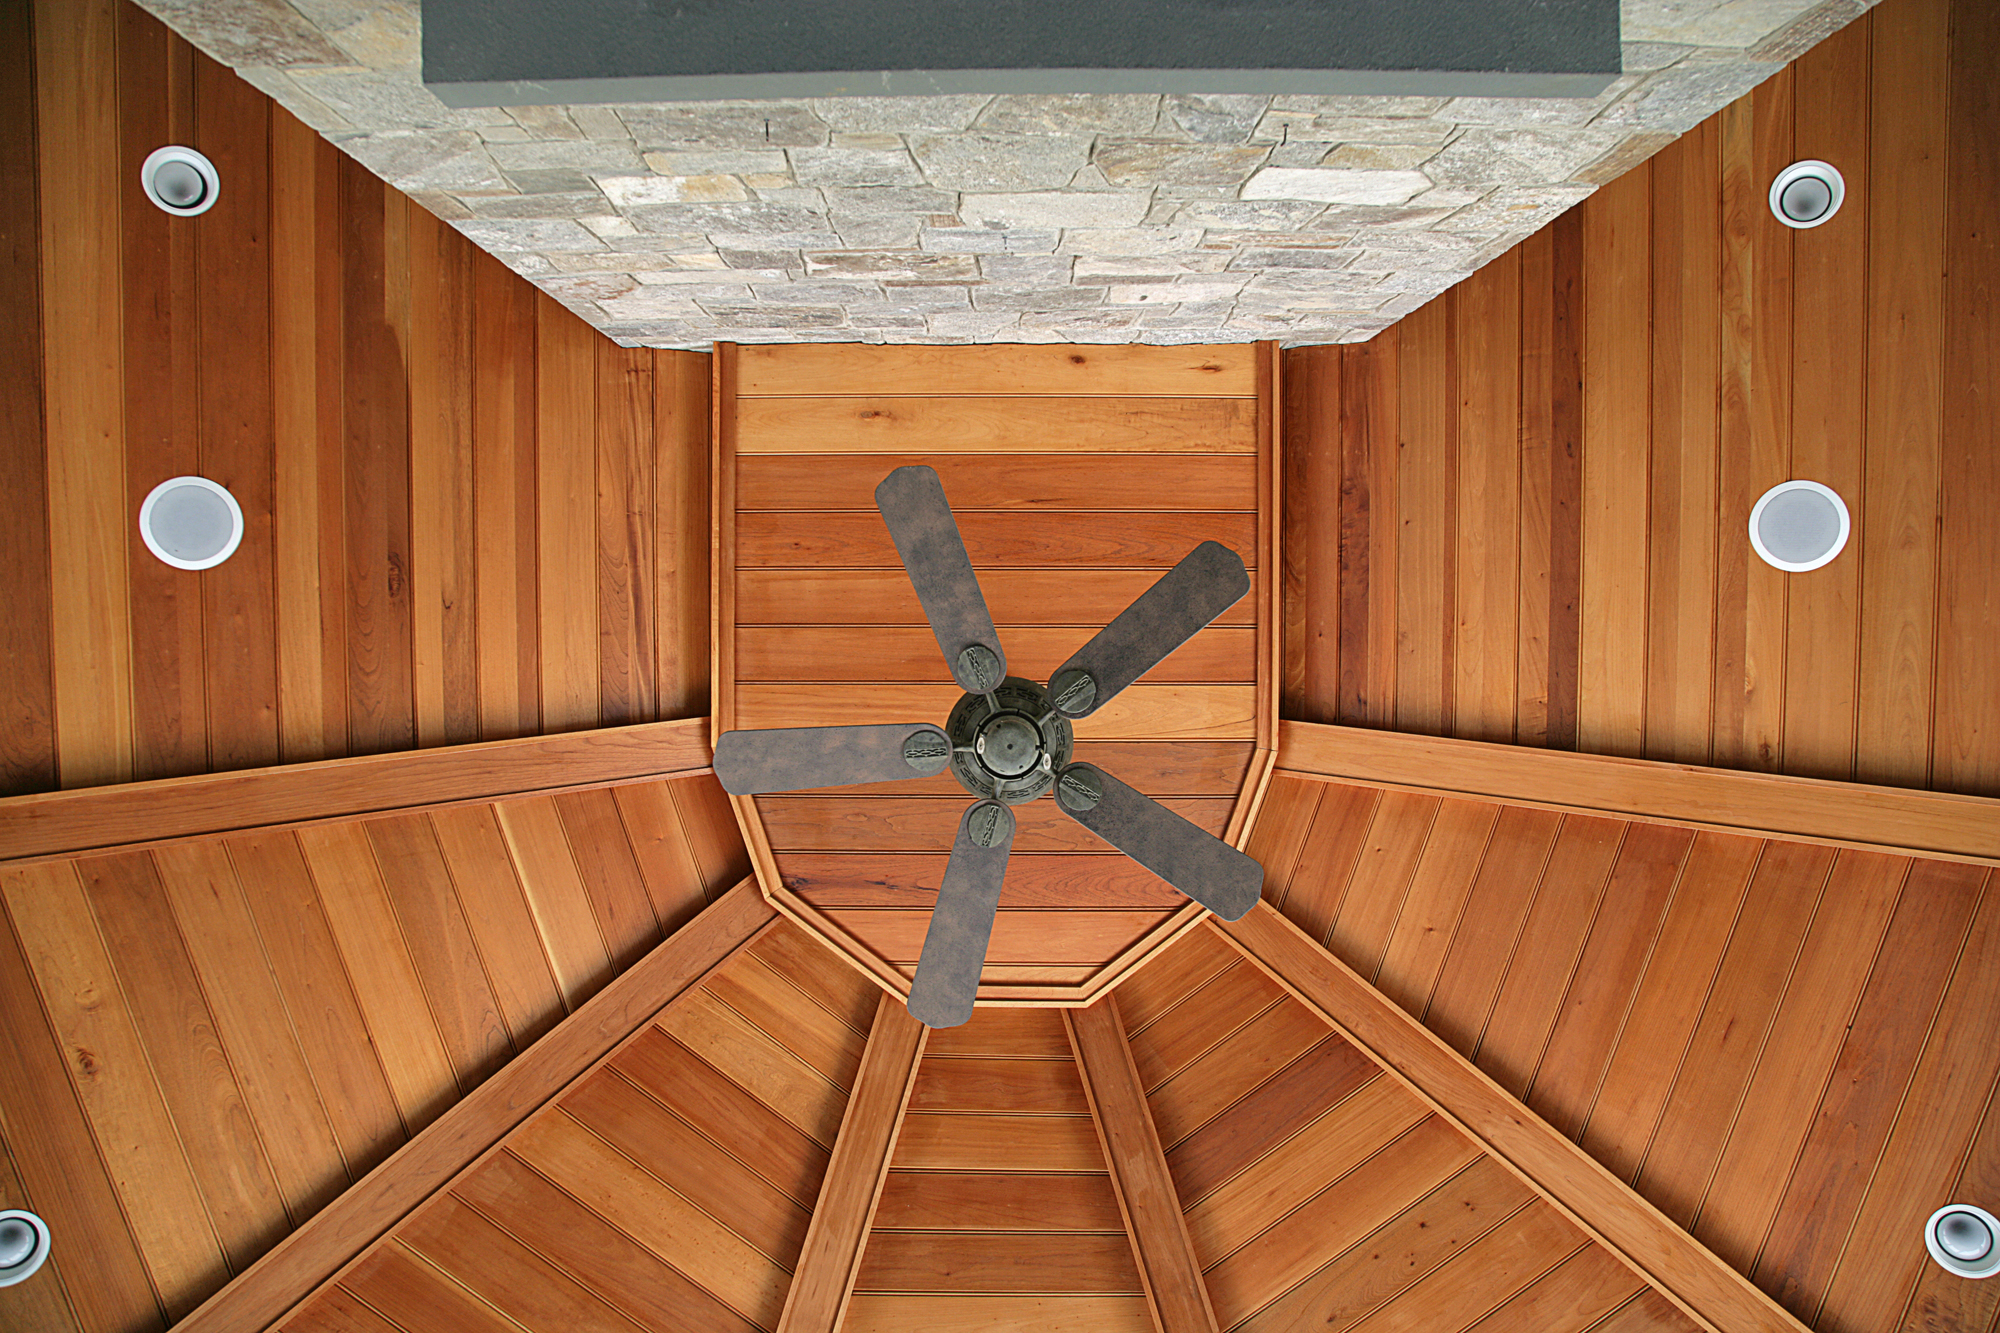 Hen Great Falls Va Traditional Outdoor Room Ceiling Detail2